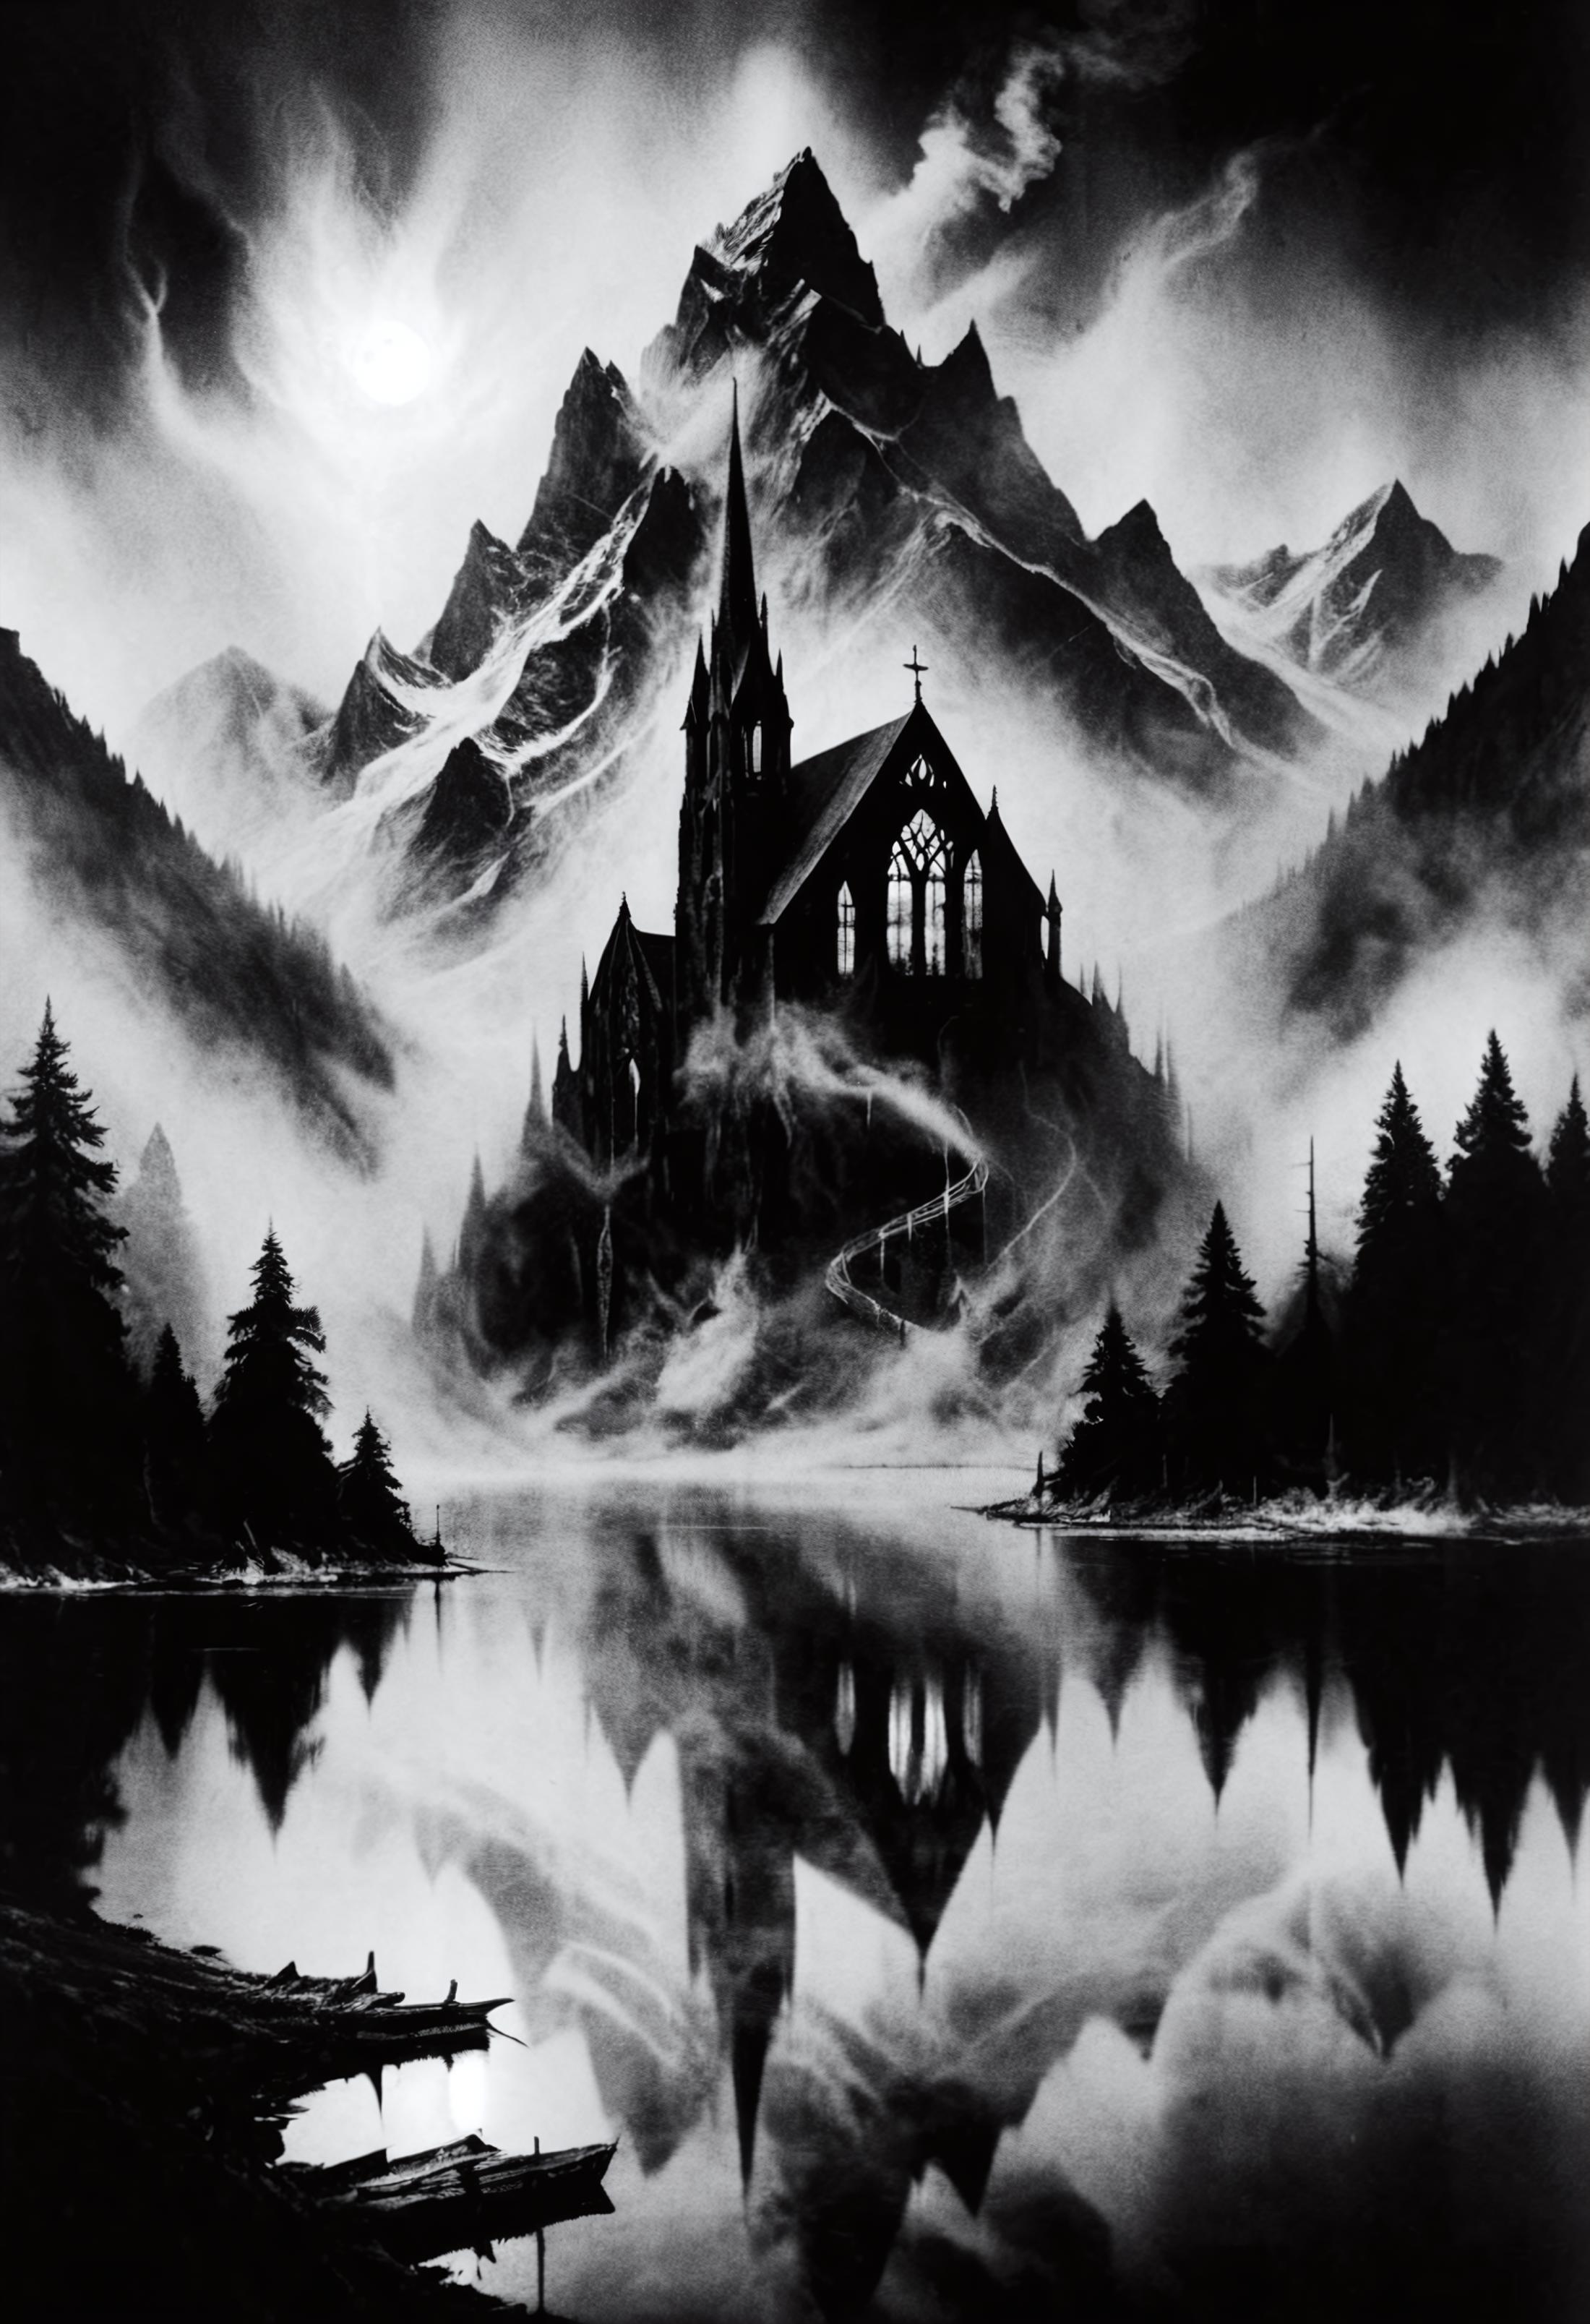 black metal art image by hinterland